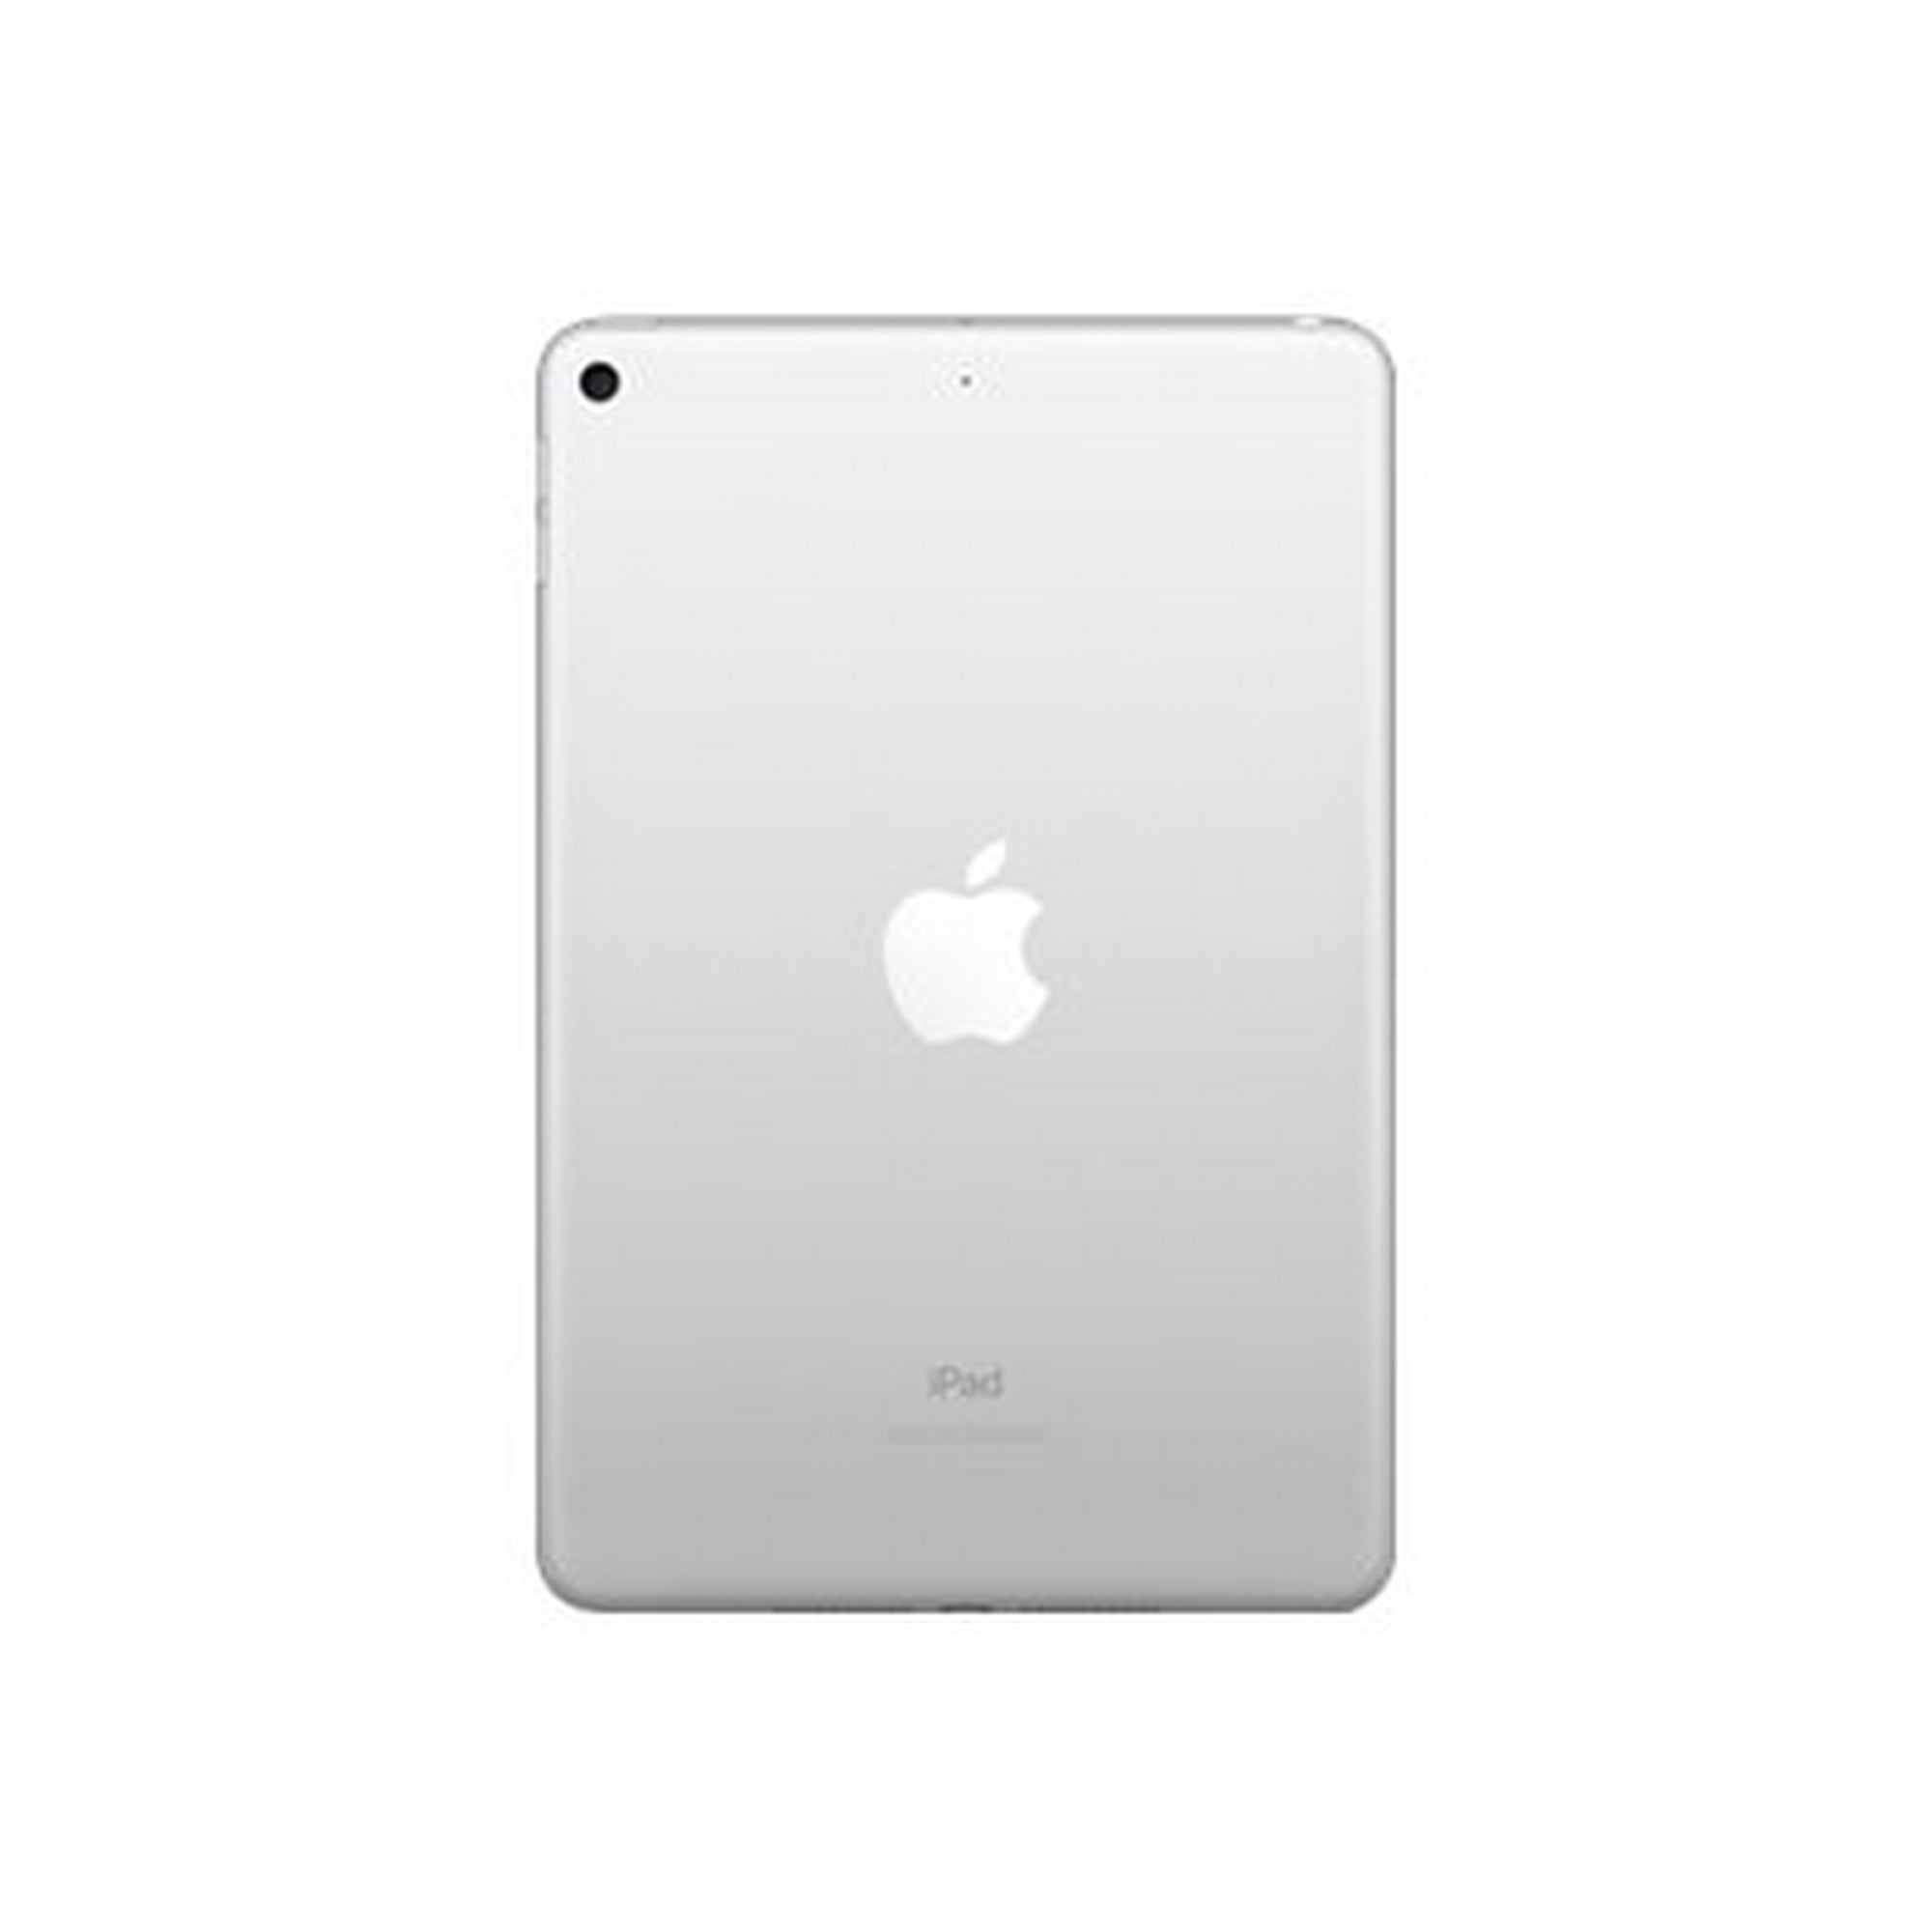 Apple iPad Mini 5 64GB Space Gray Wi-Fi MUQW2VC/A | Walmart Canada